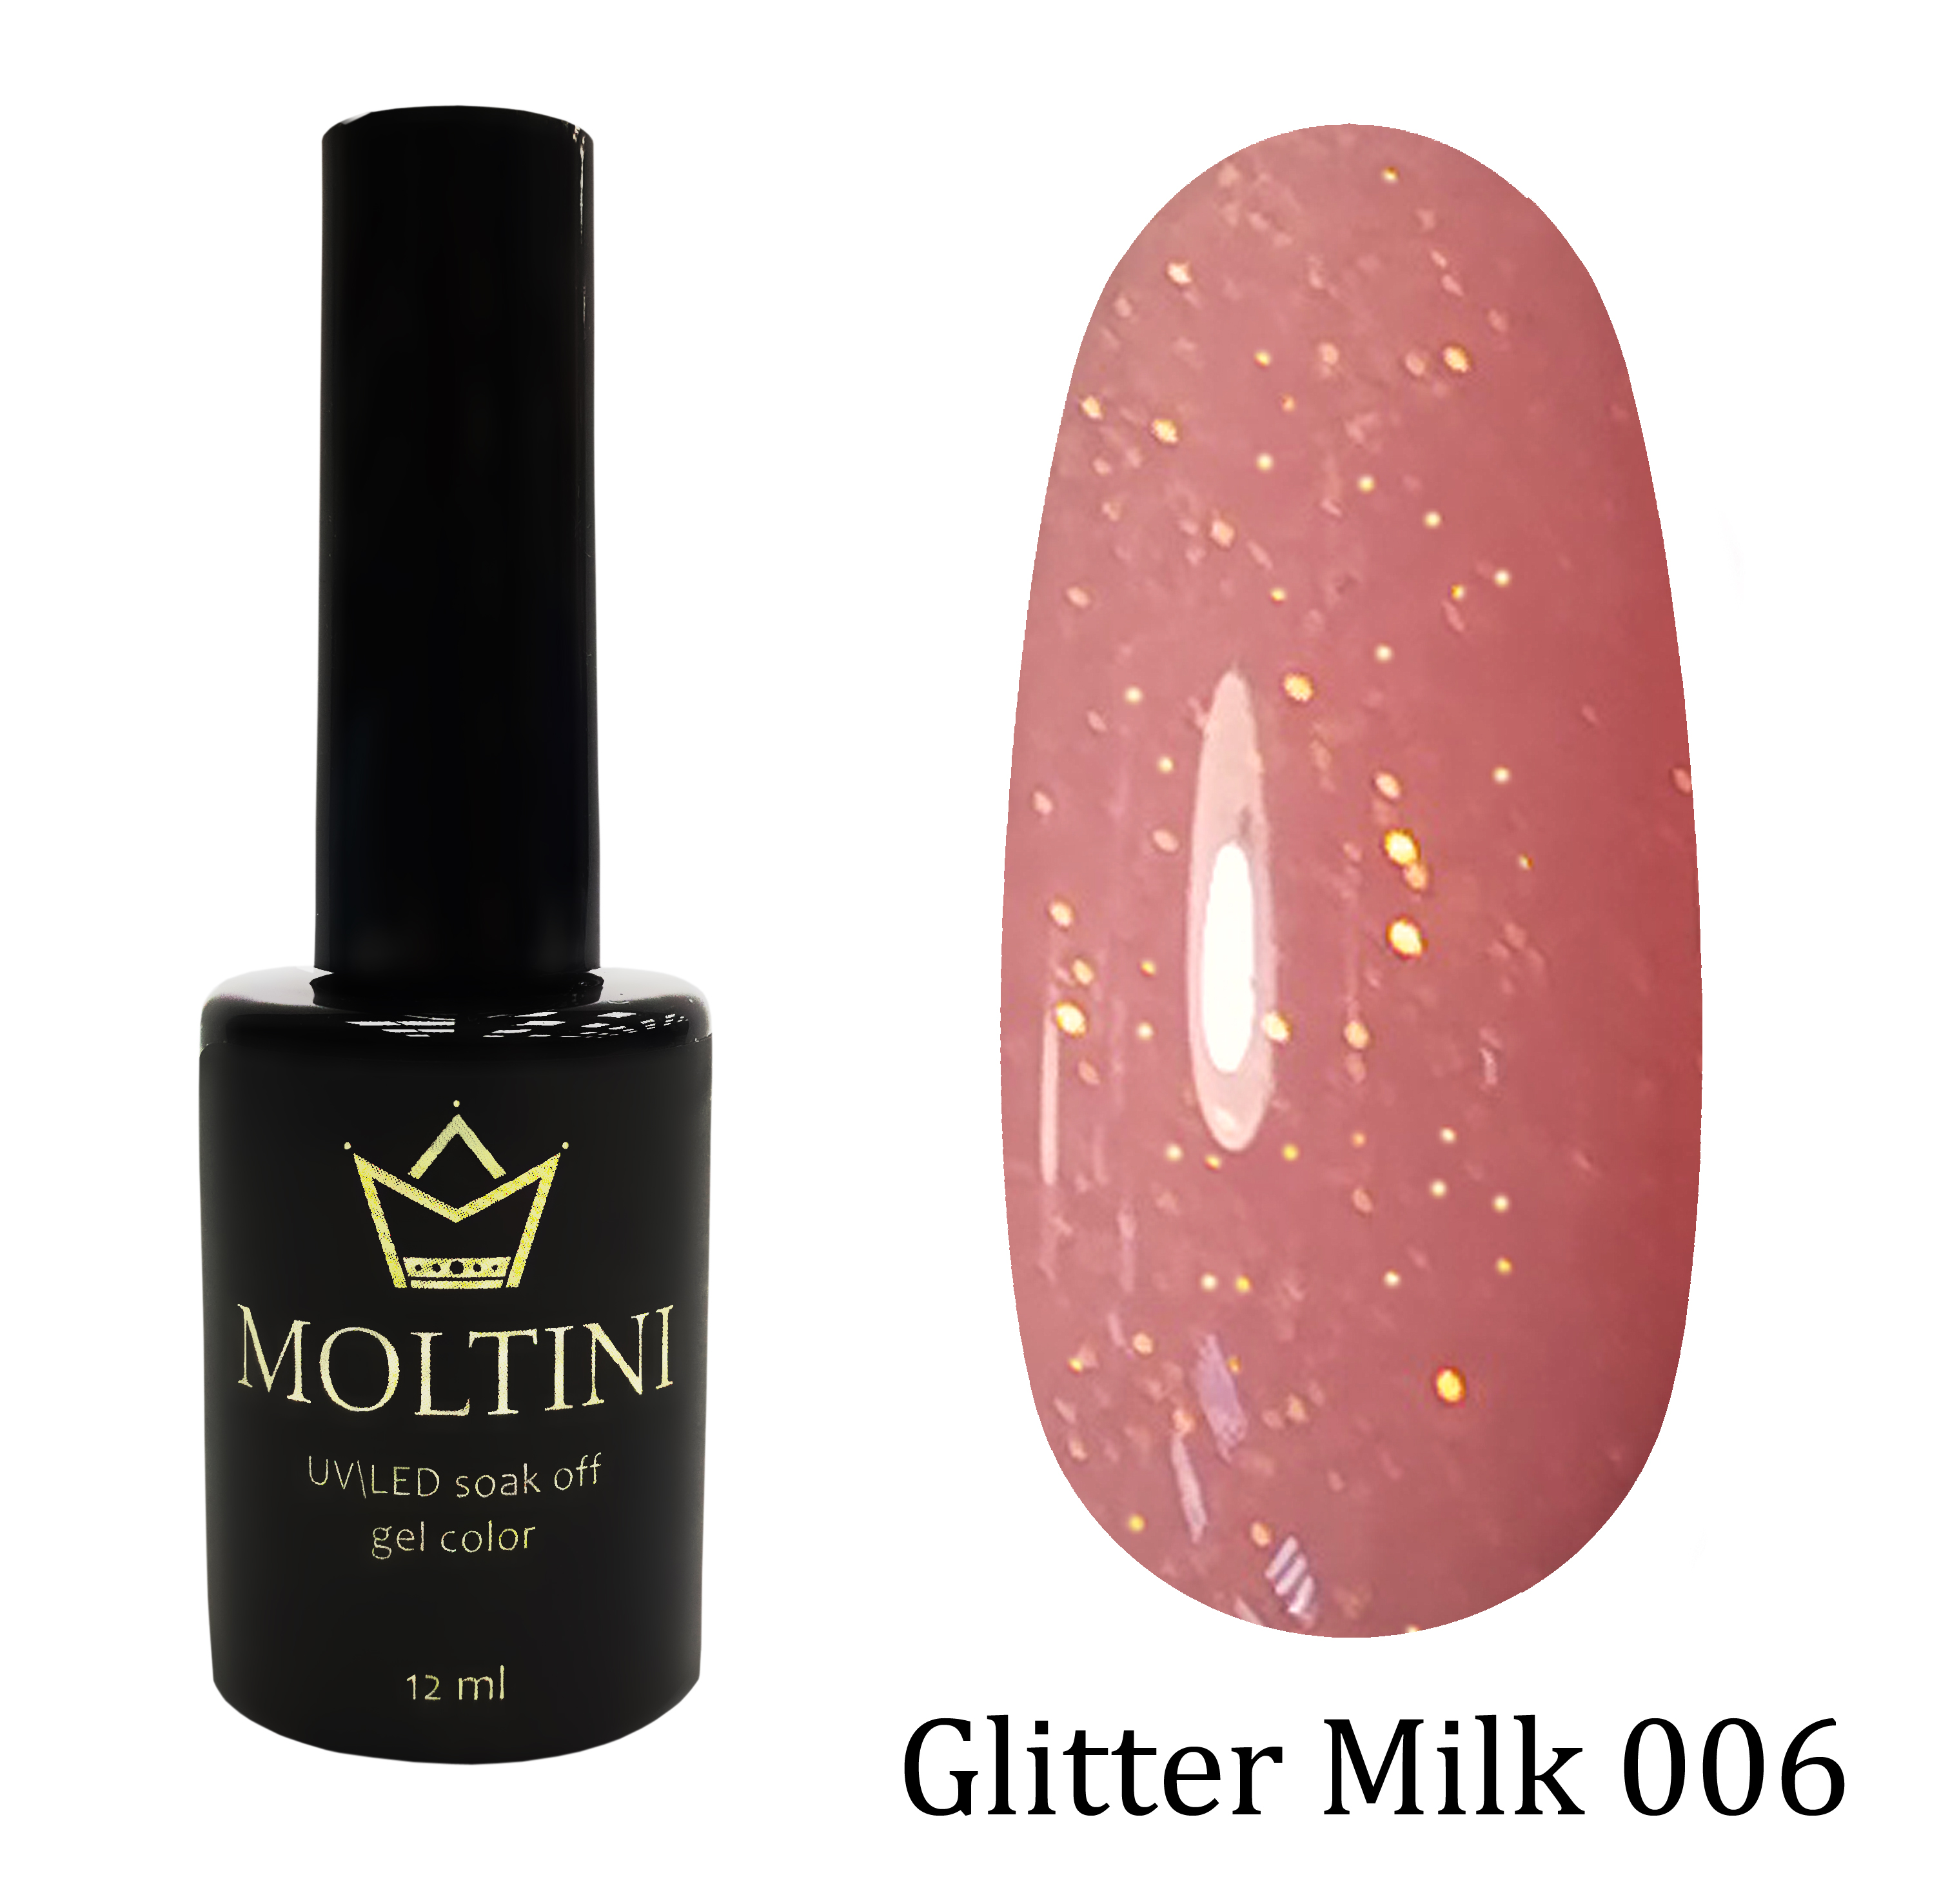 Moltini цветной гель-лак Glitter Milk 006, 12 мл